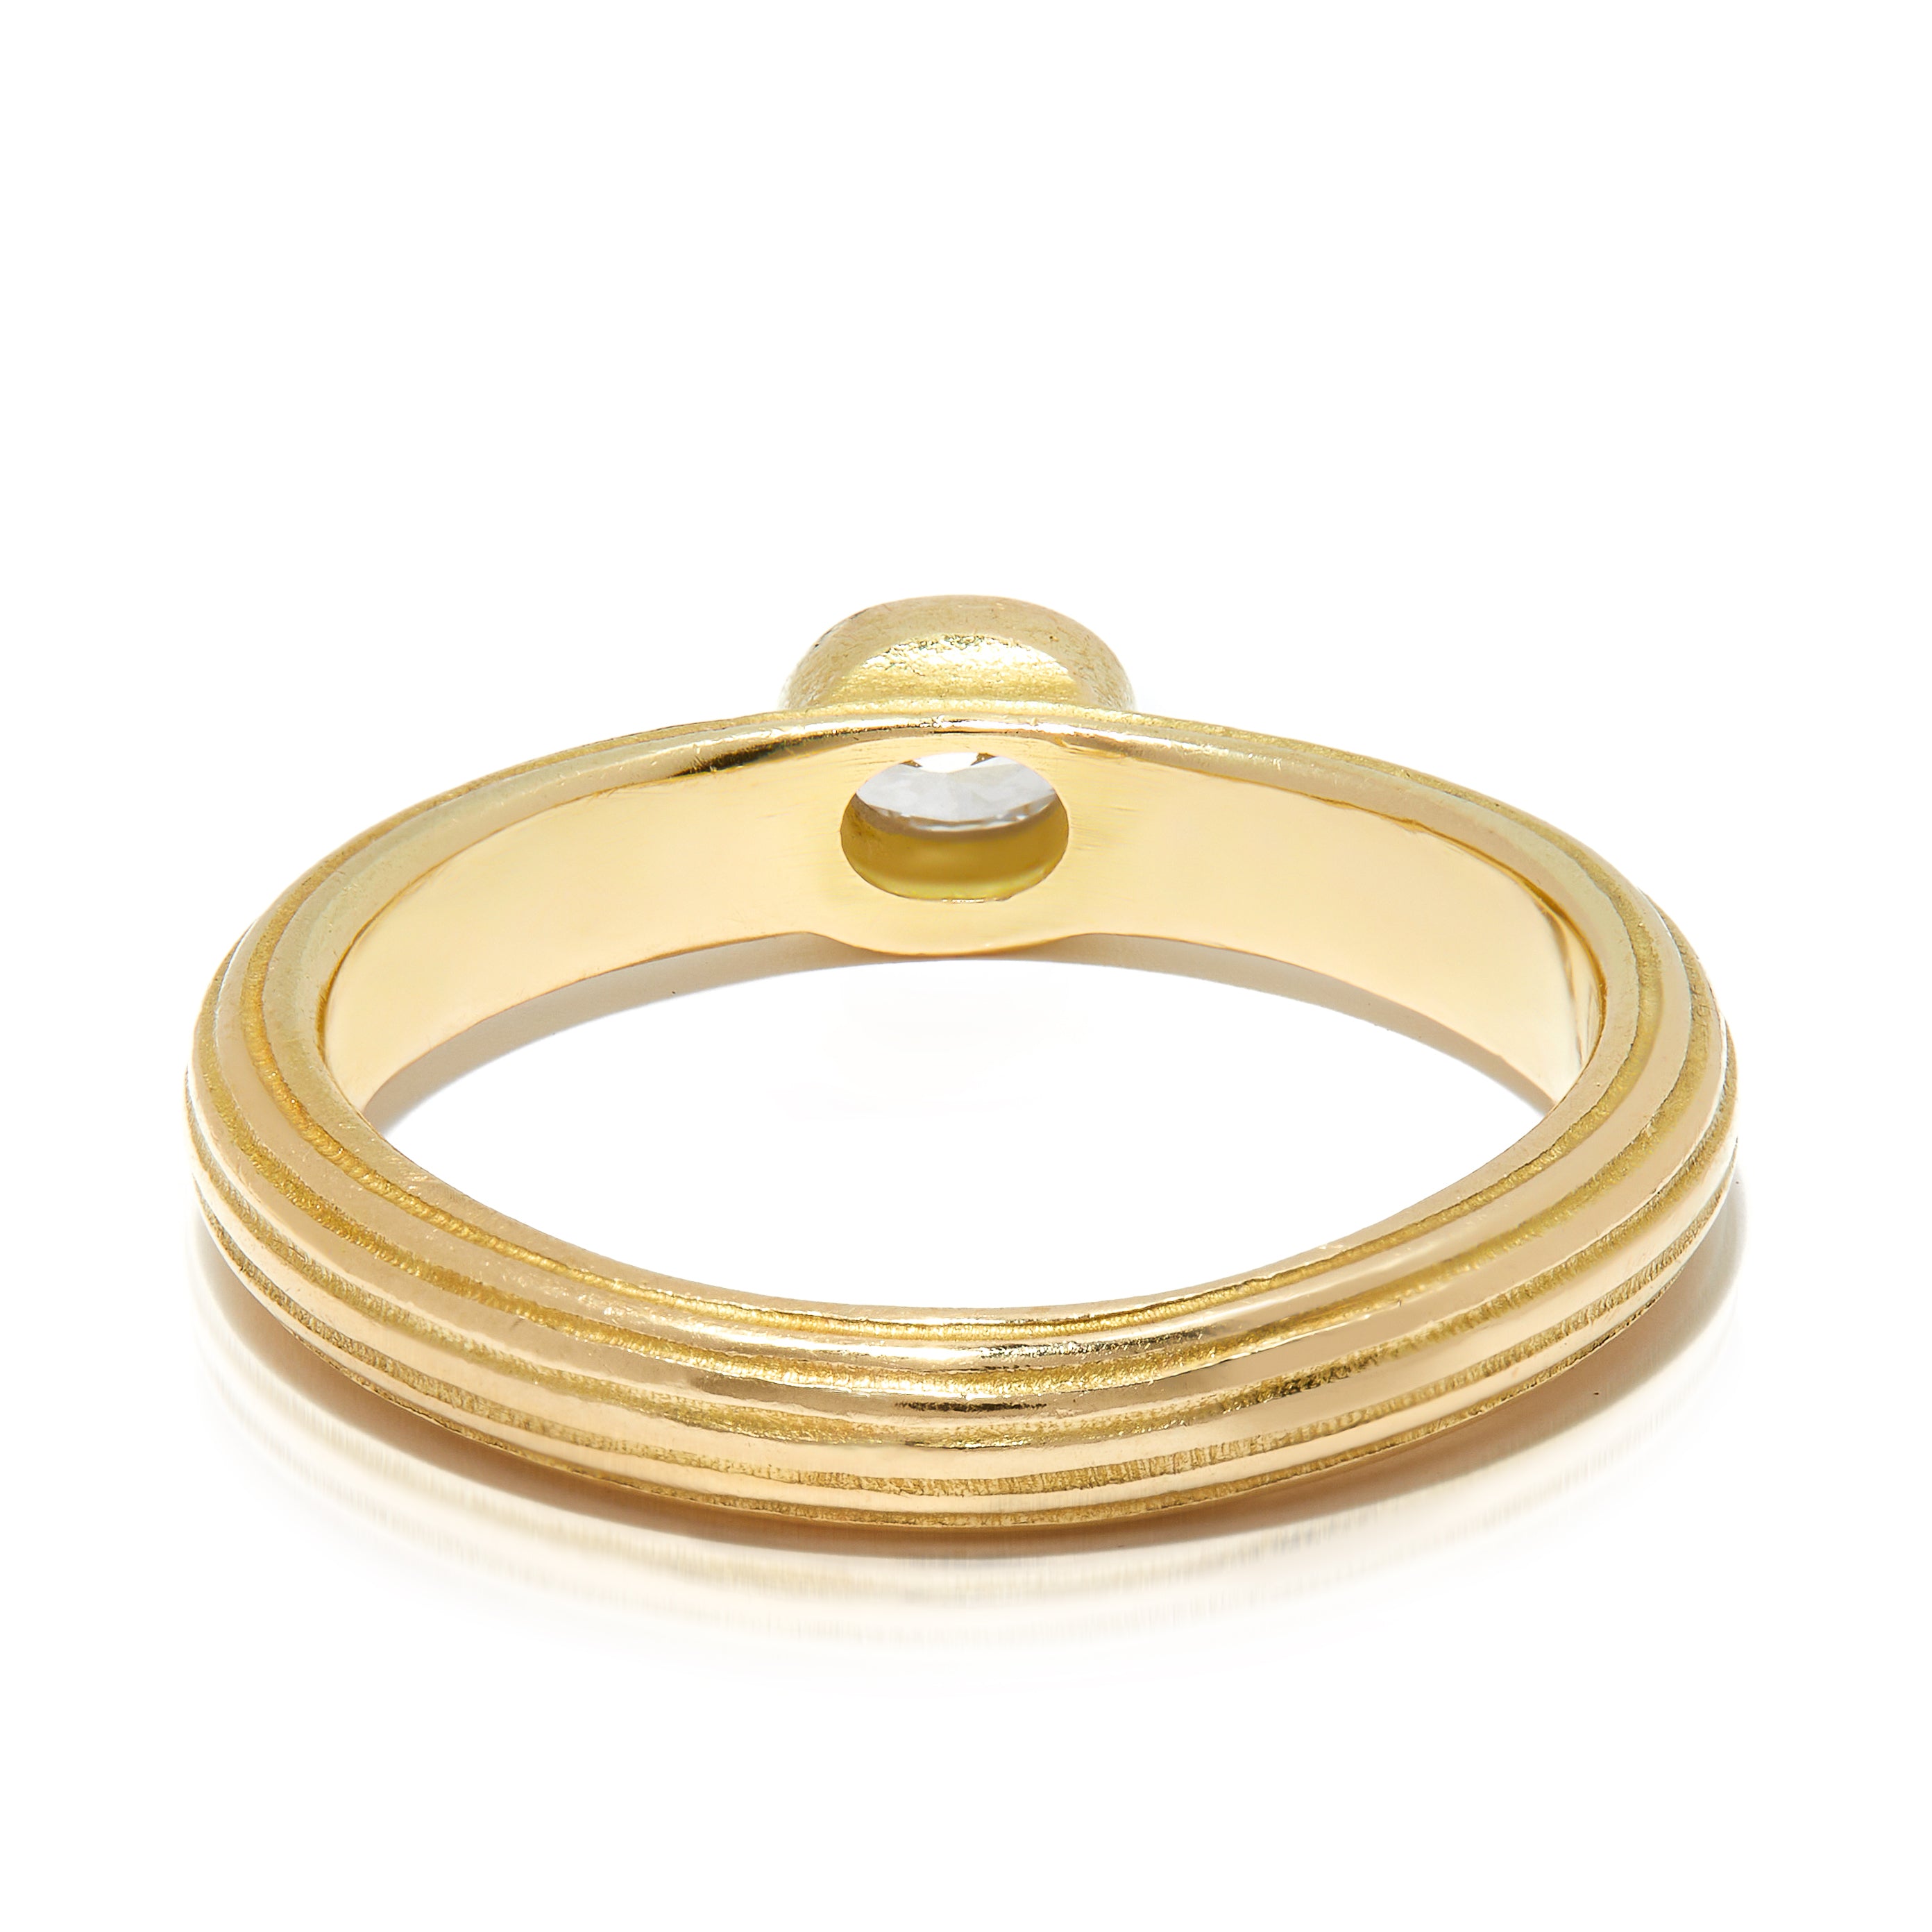 Vintage gold diamond band ring with Florentine finish.